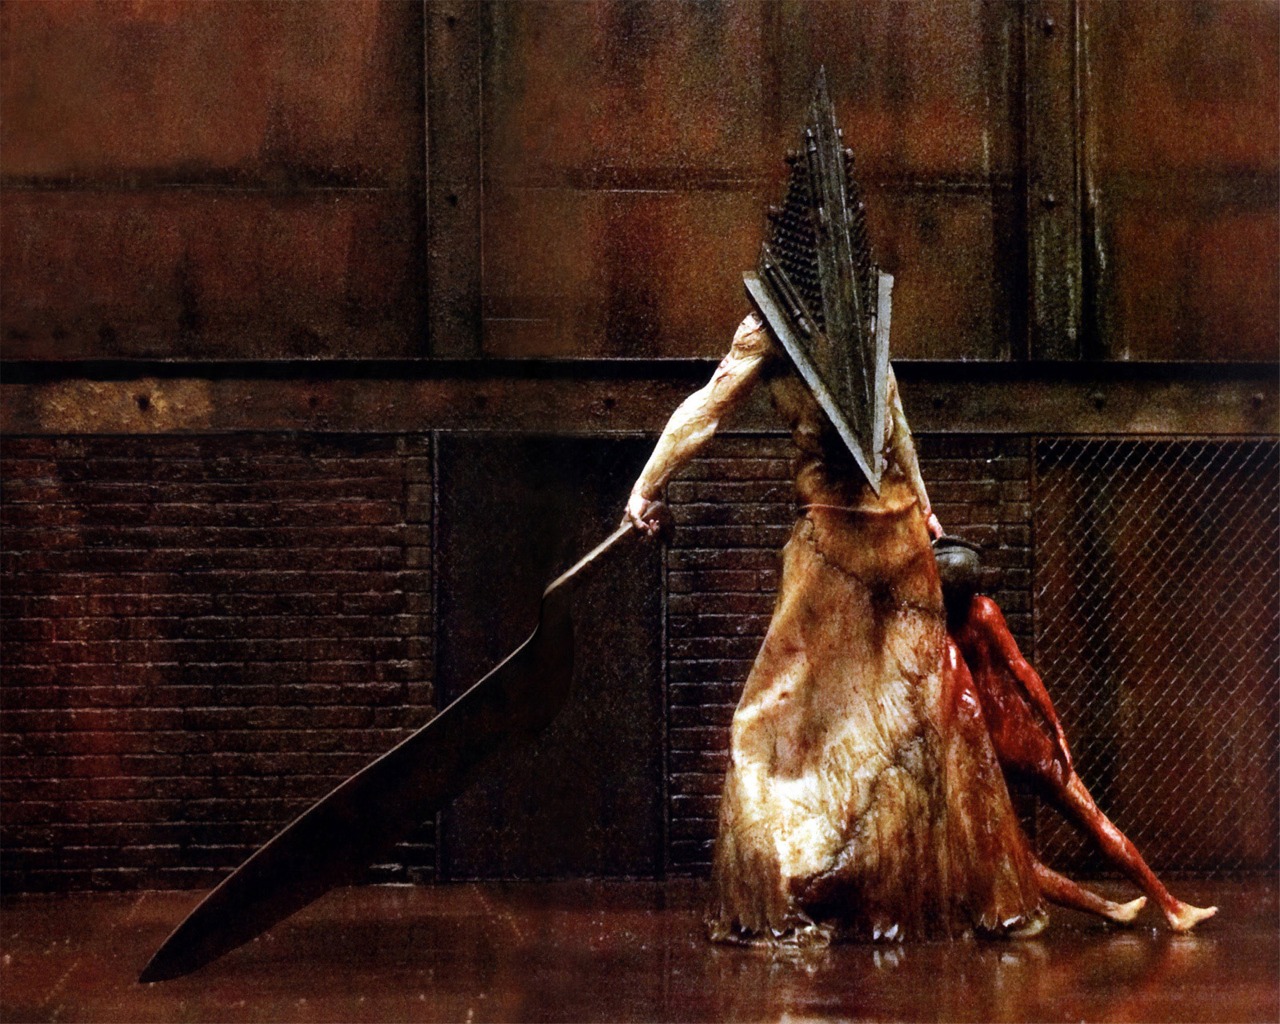 Silent Hill Lore: Pyramid Head